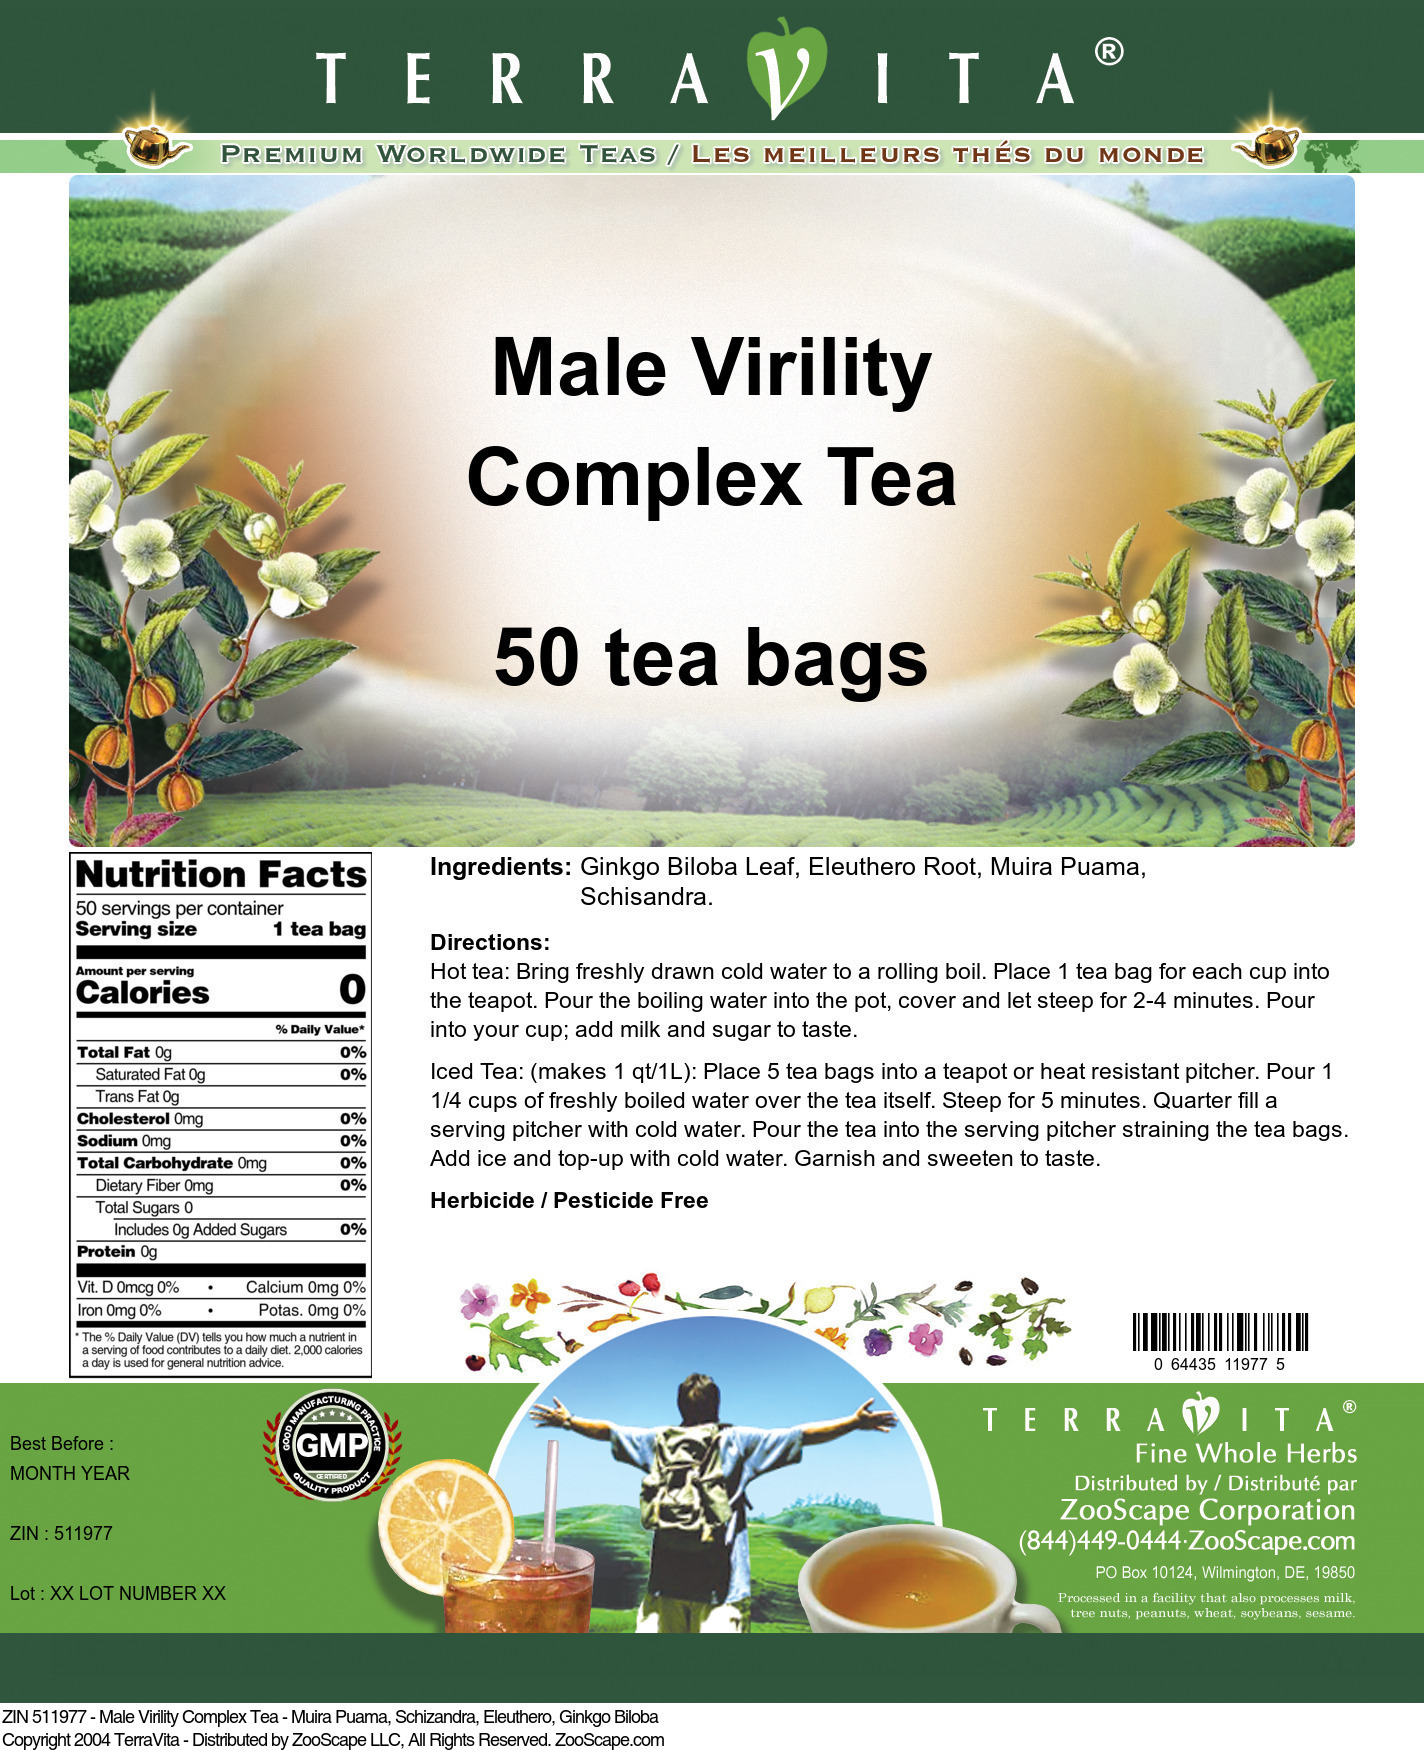 Male Virility Complex Tea - Muira Puama, Schizandra, Eleuthero, Ginkgo Biloba - Label